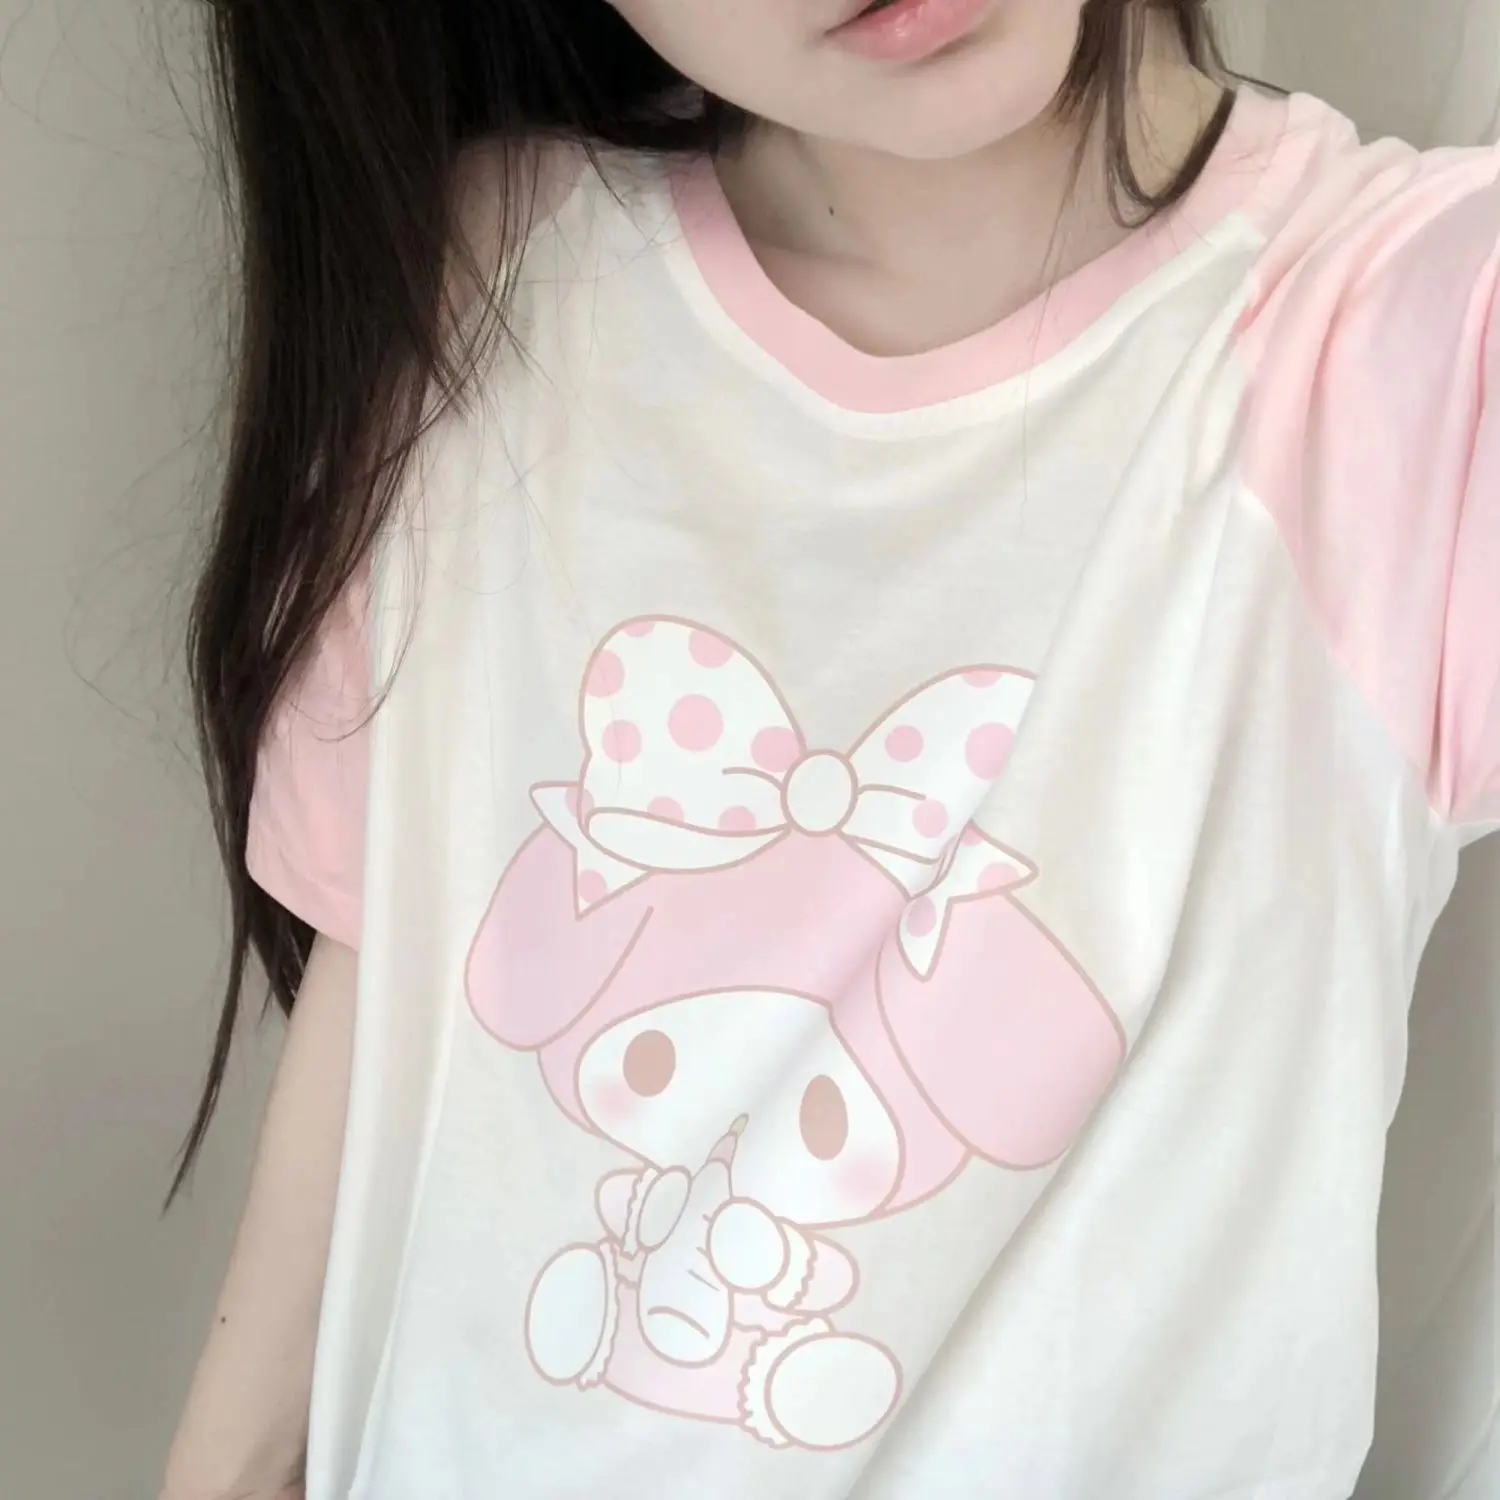 Sanrios Kawaii Anime My Melody Cute Cartoon Short sleeved T shirt Women Summer New Color Matching - My Melody Plush